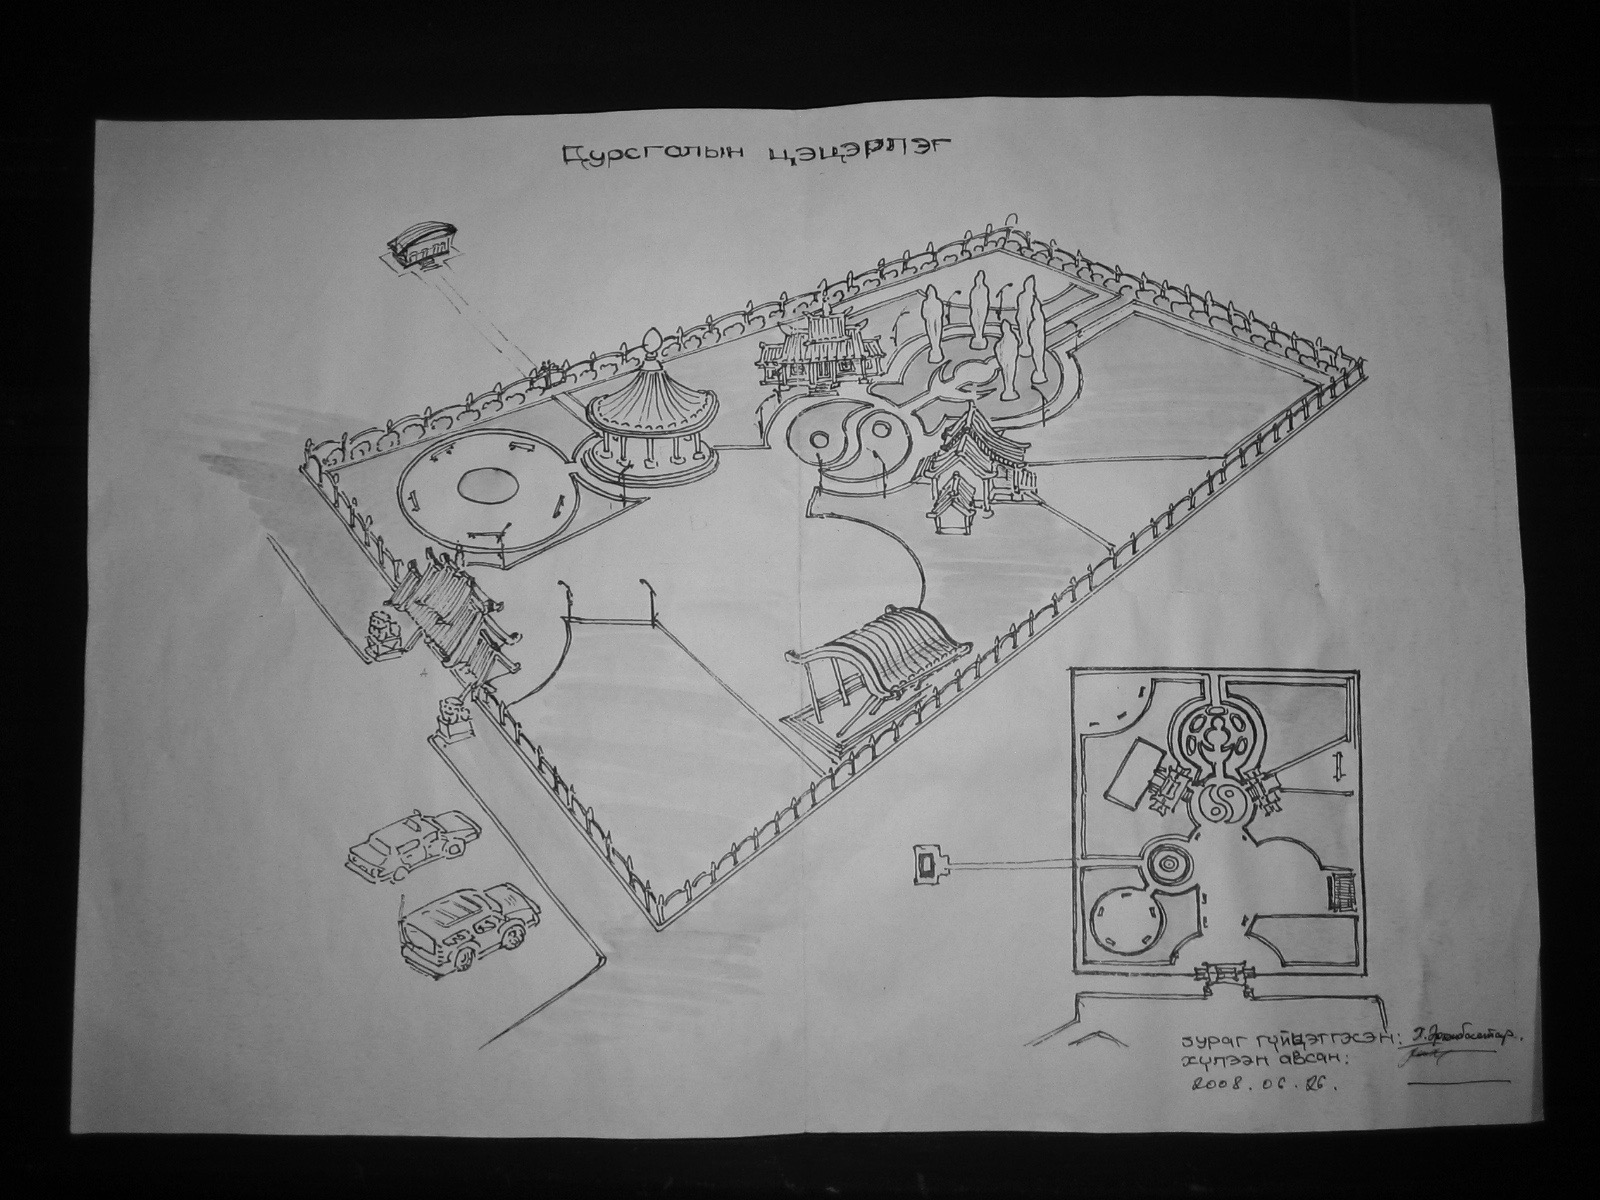 Preliminary Line Drawings for a Tugsbaysgalant Meditation Park. Reproduced courtesy N Gantumur. 26 September 2008.